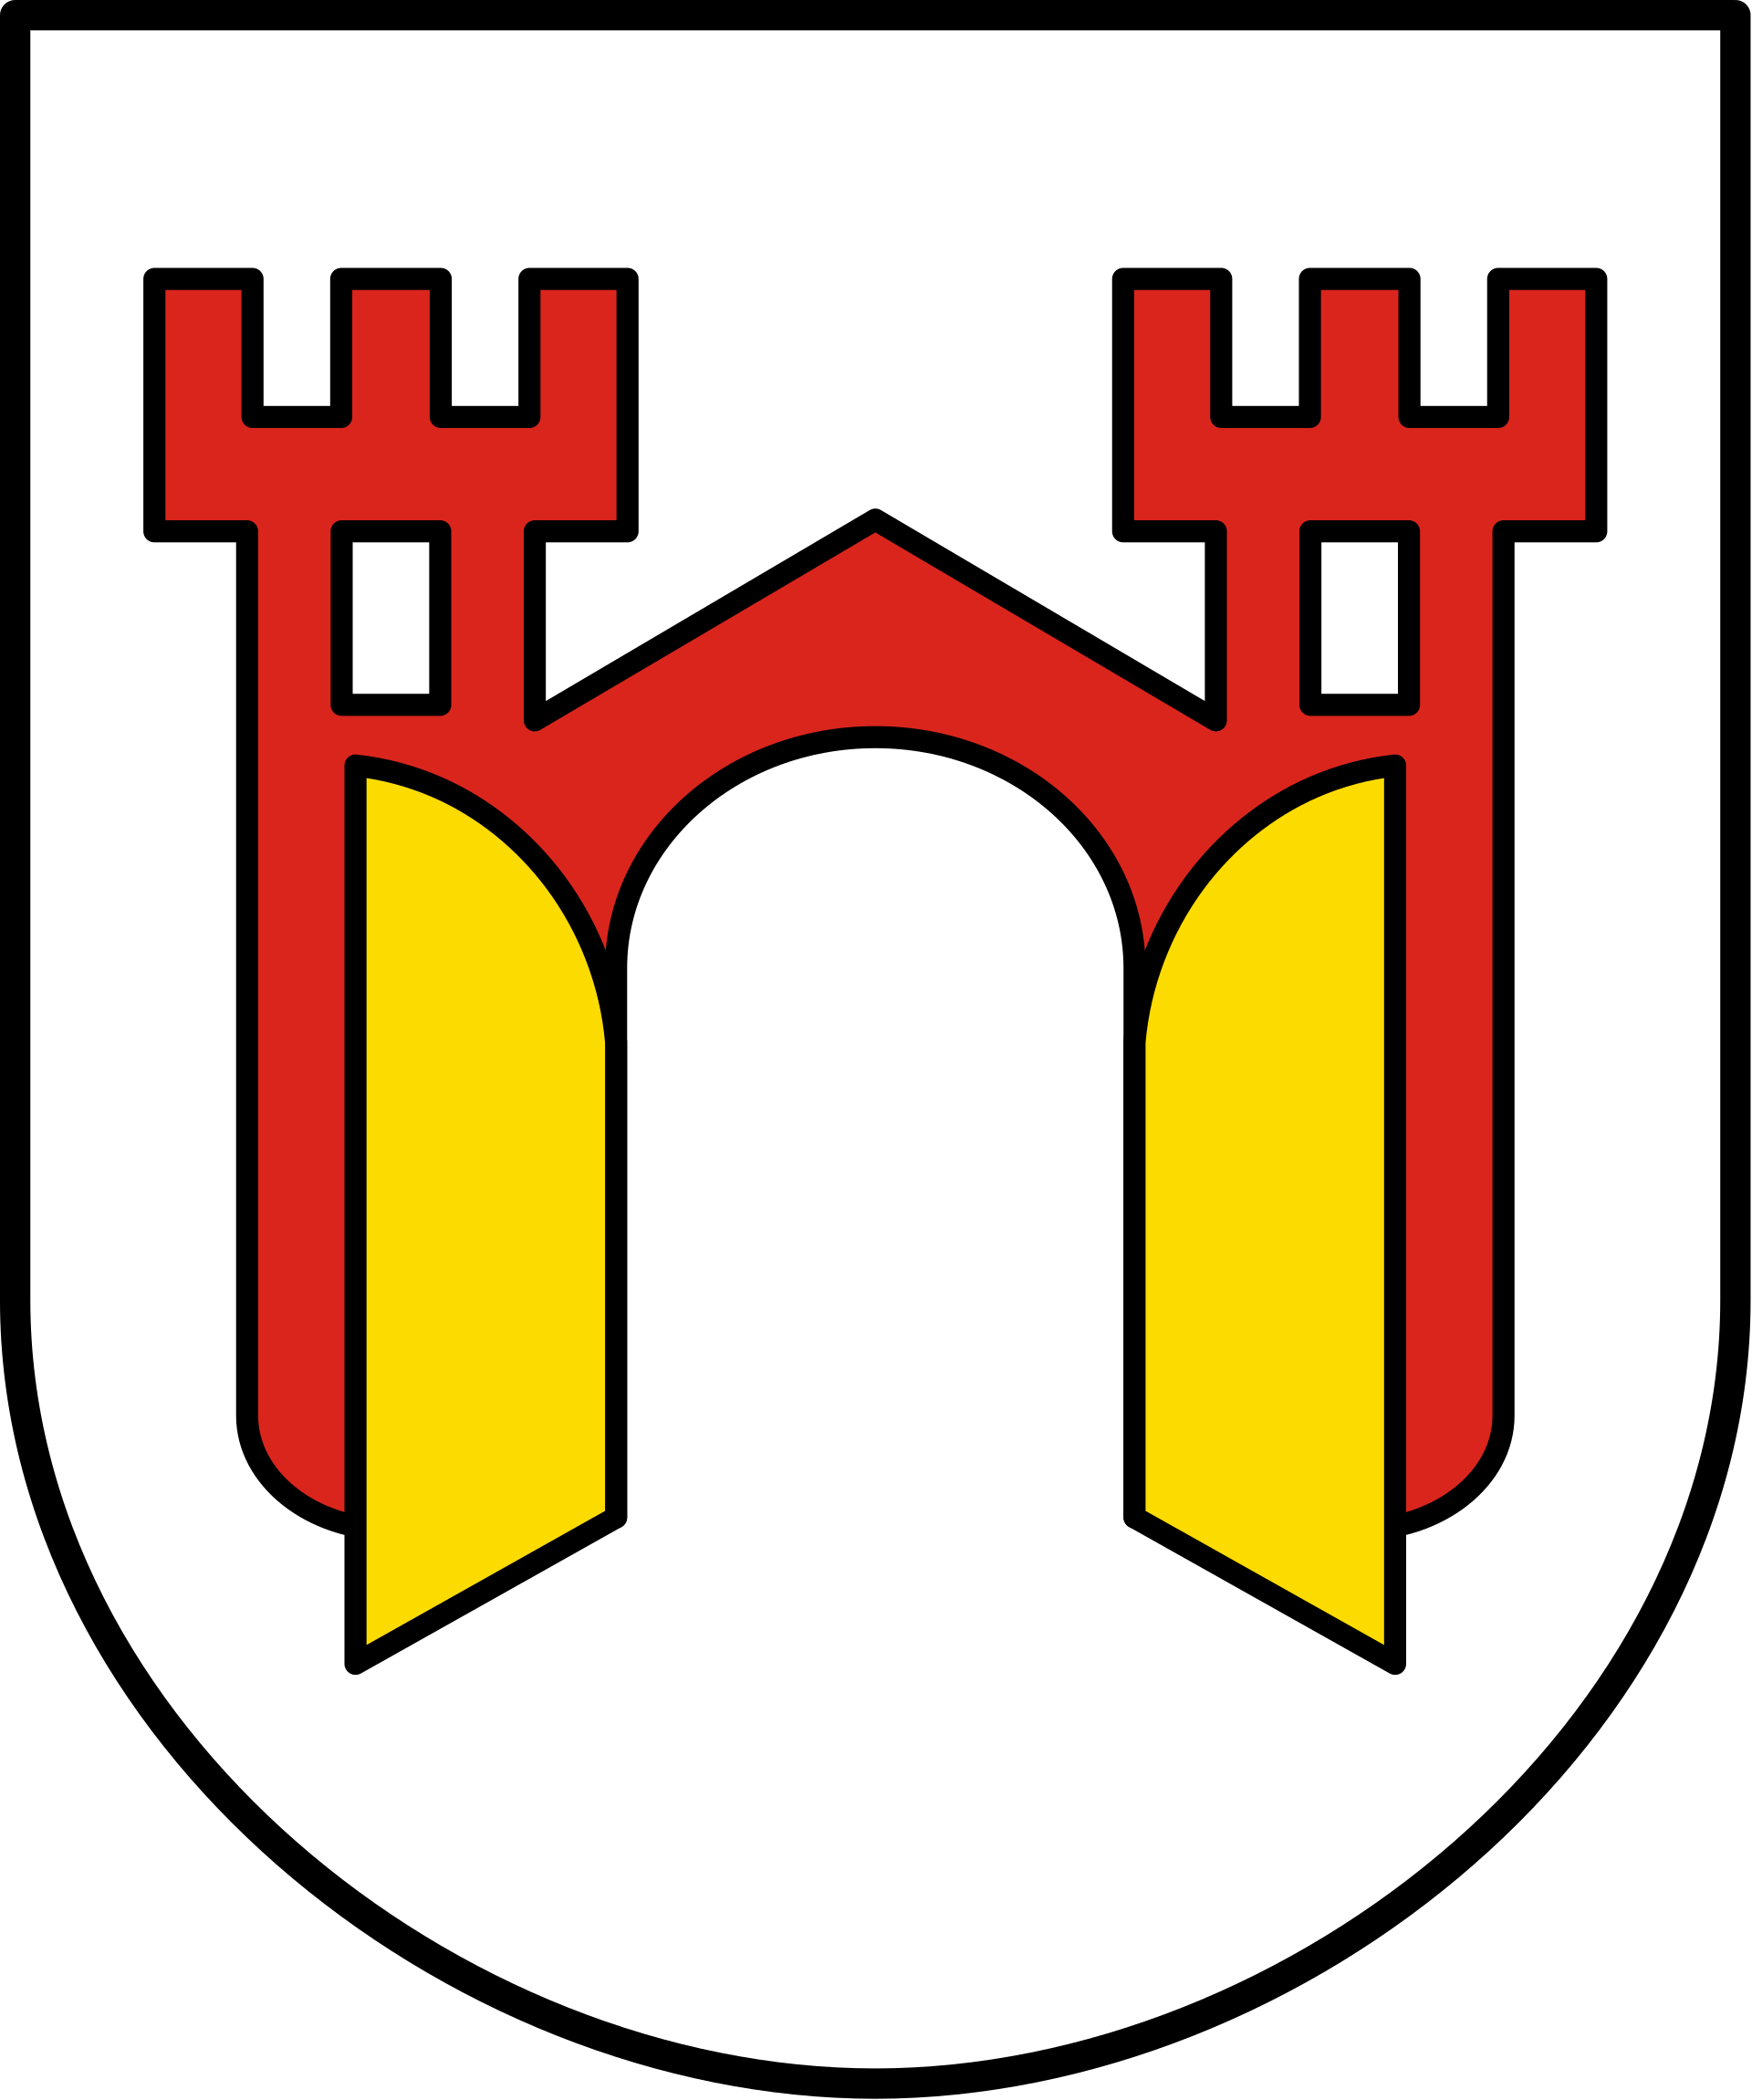 City of Offenburg